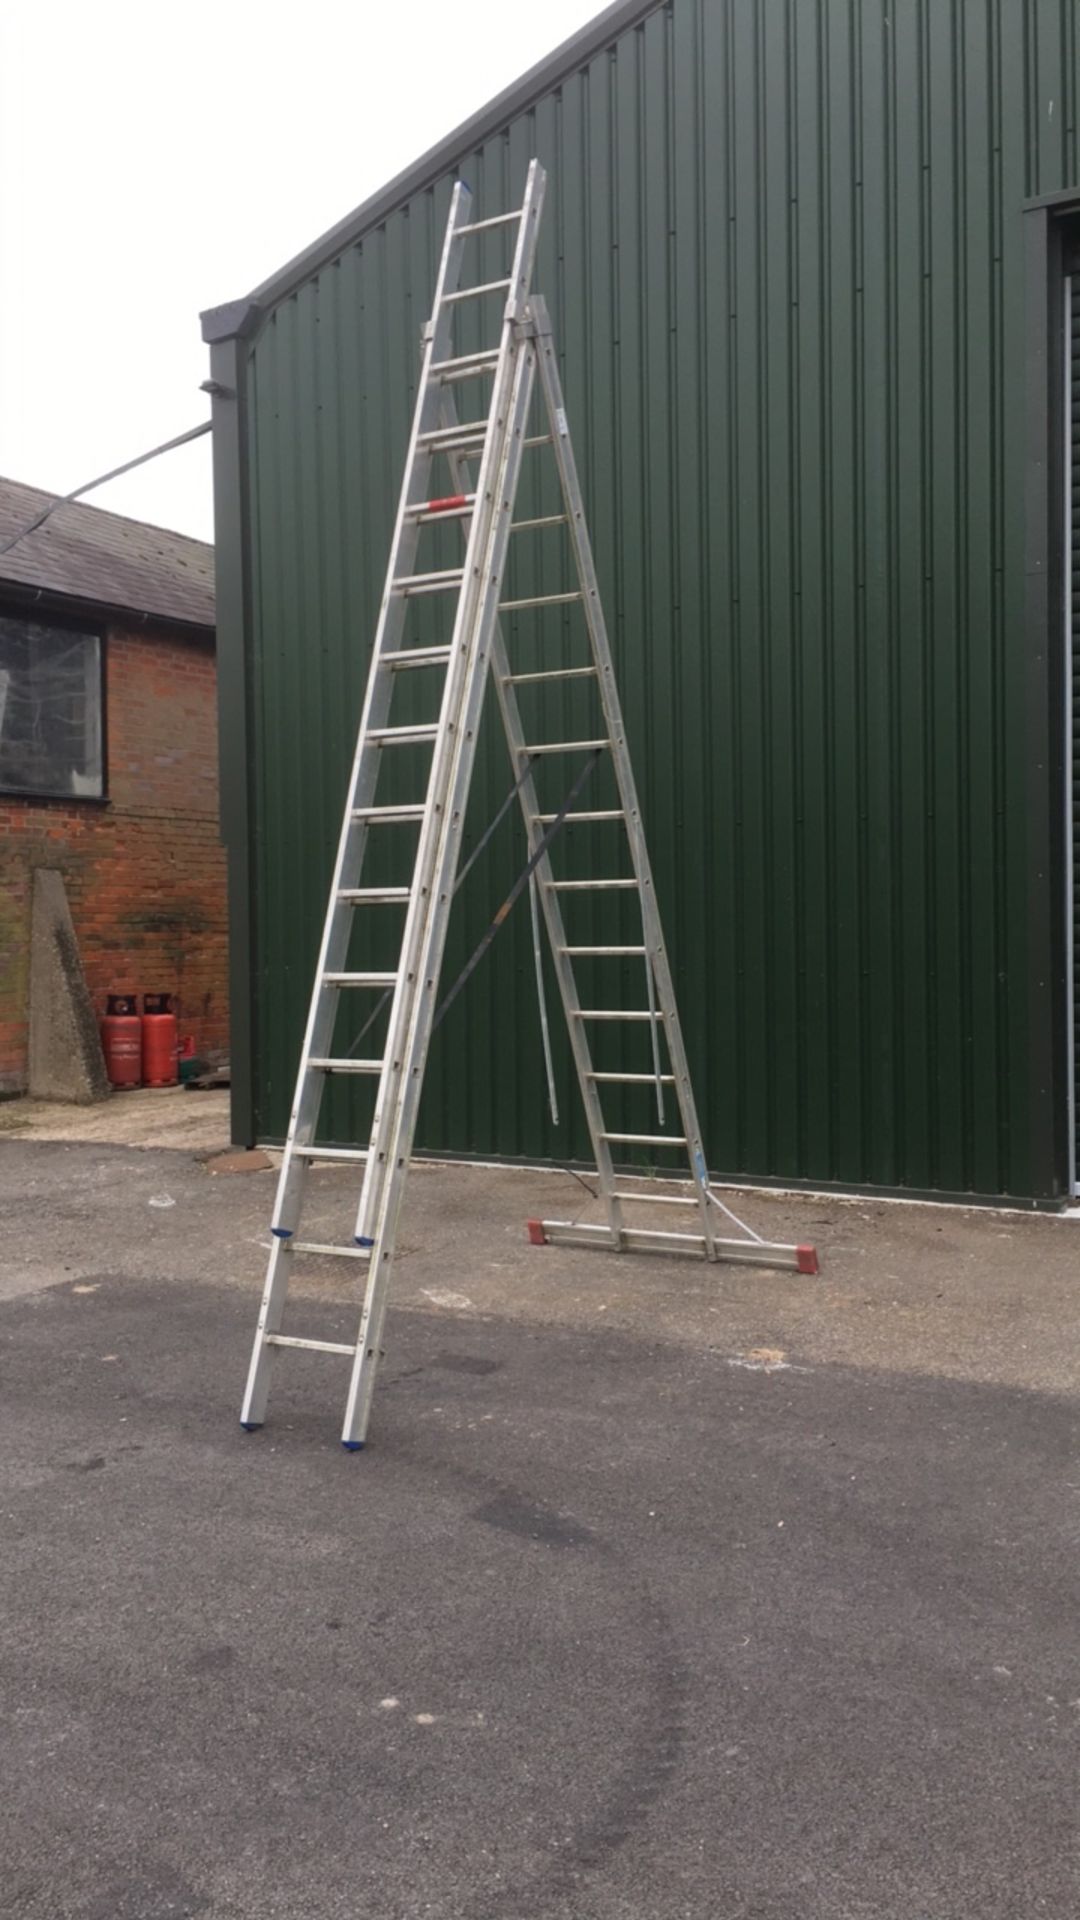 Clow aluminium ladder (A755820) - Image 2 of 3